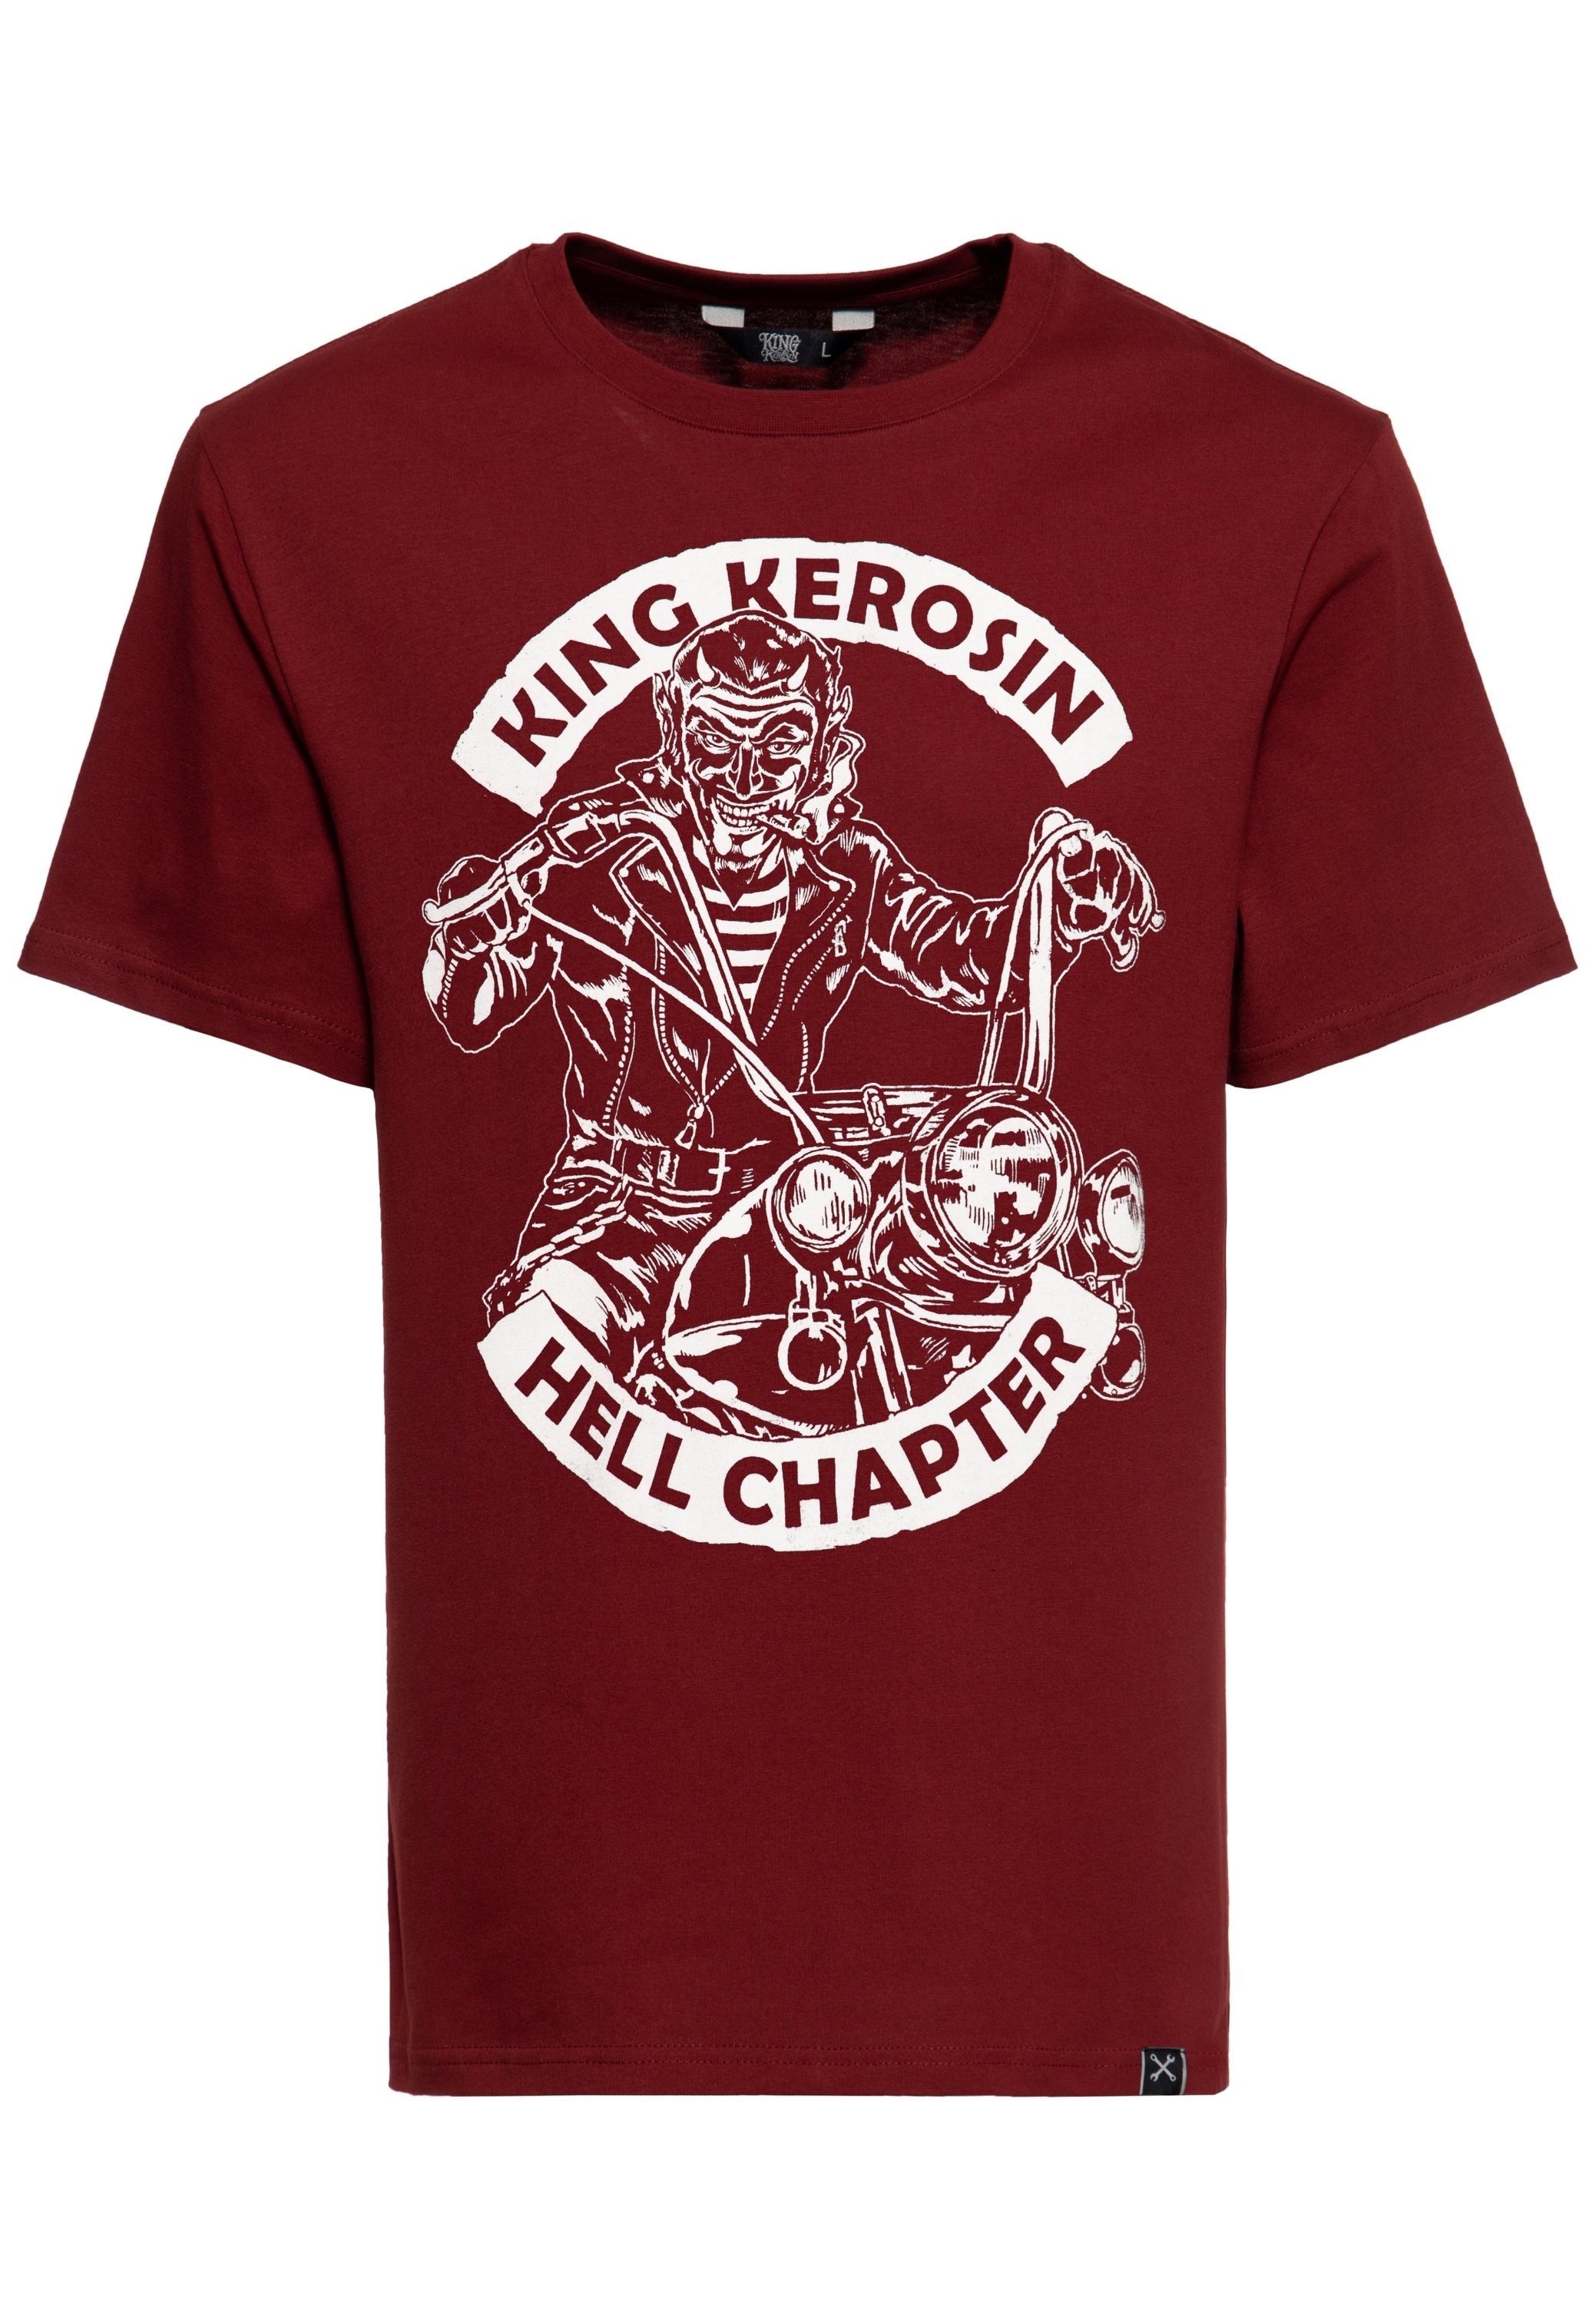 Devil im Print-Shirt Chopper front weinrot KingKerosin (1-tlg) Print Chapter Hell Vintage Stil